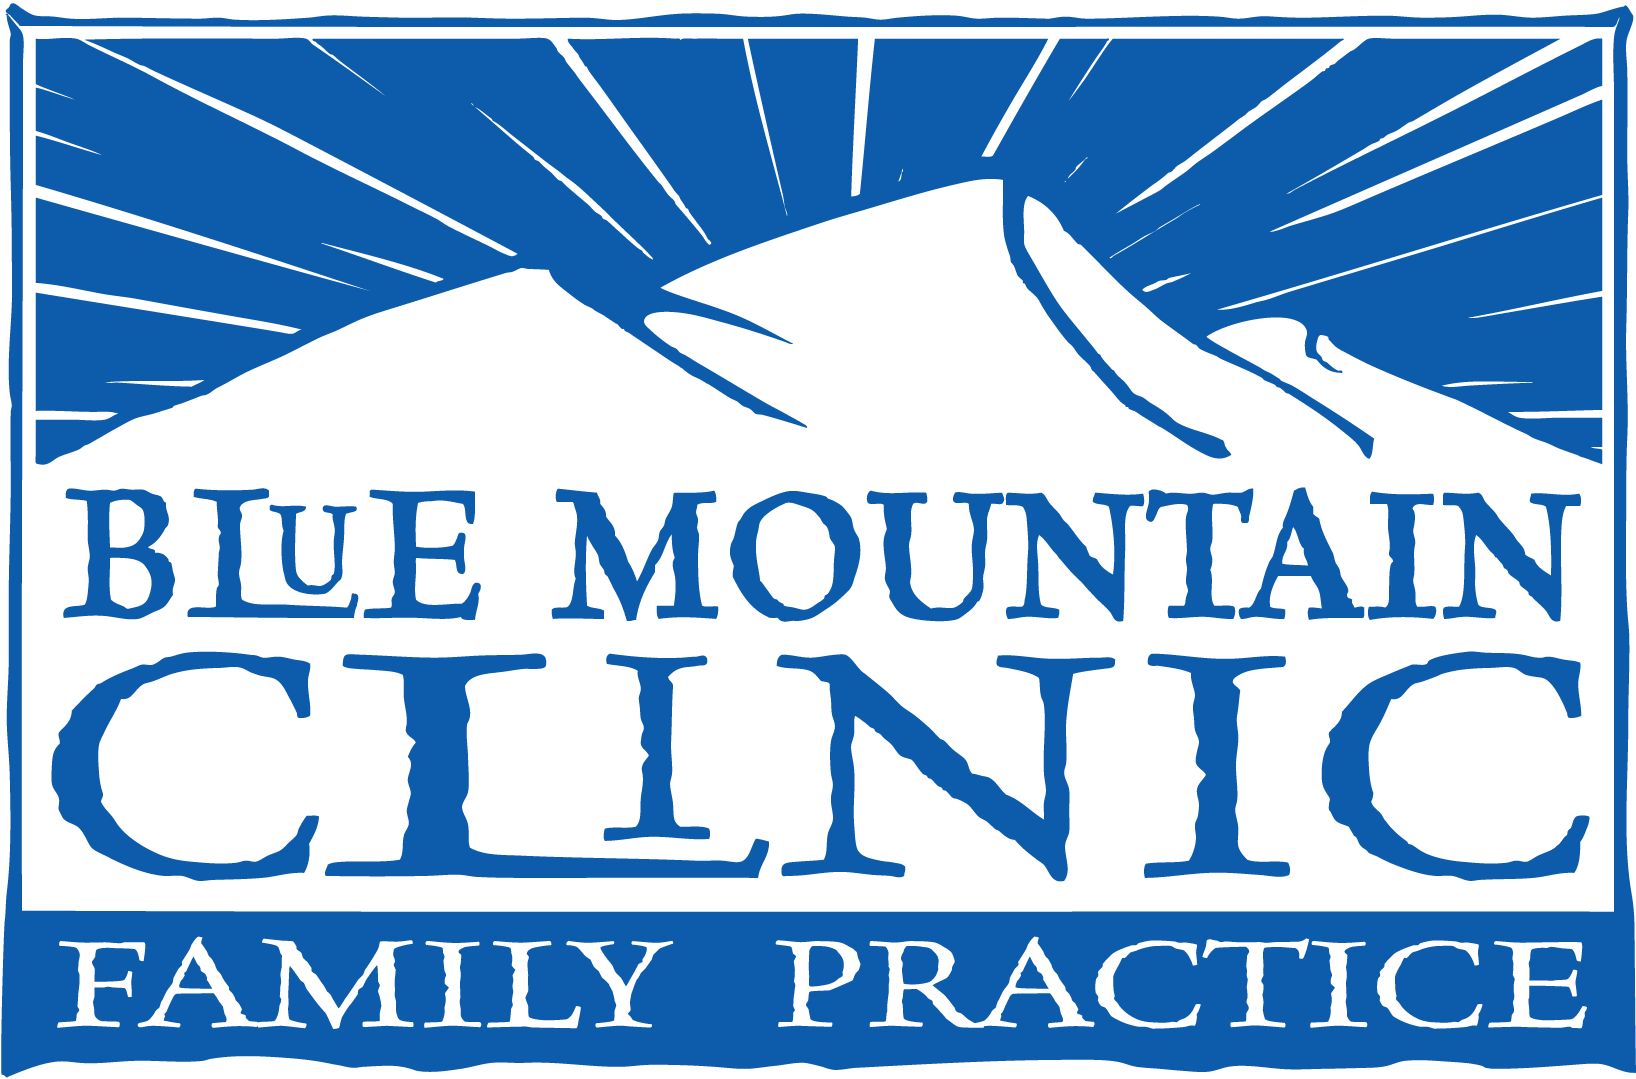 Blue Mountain Clinic